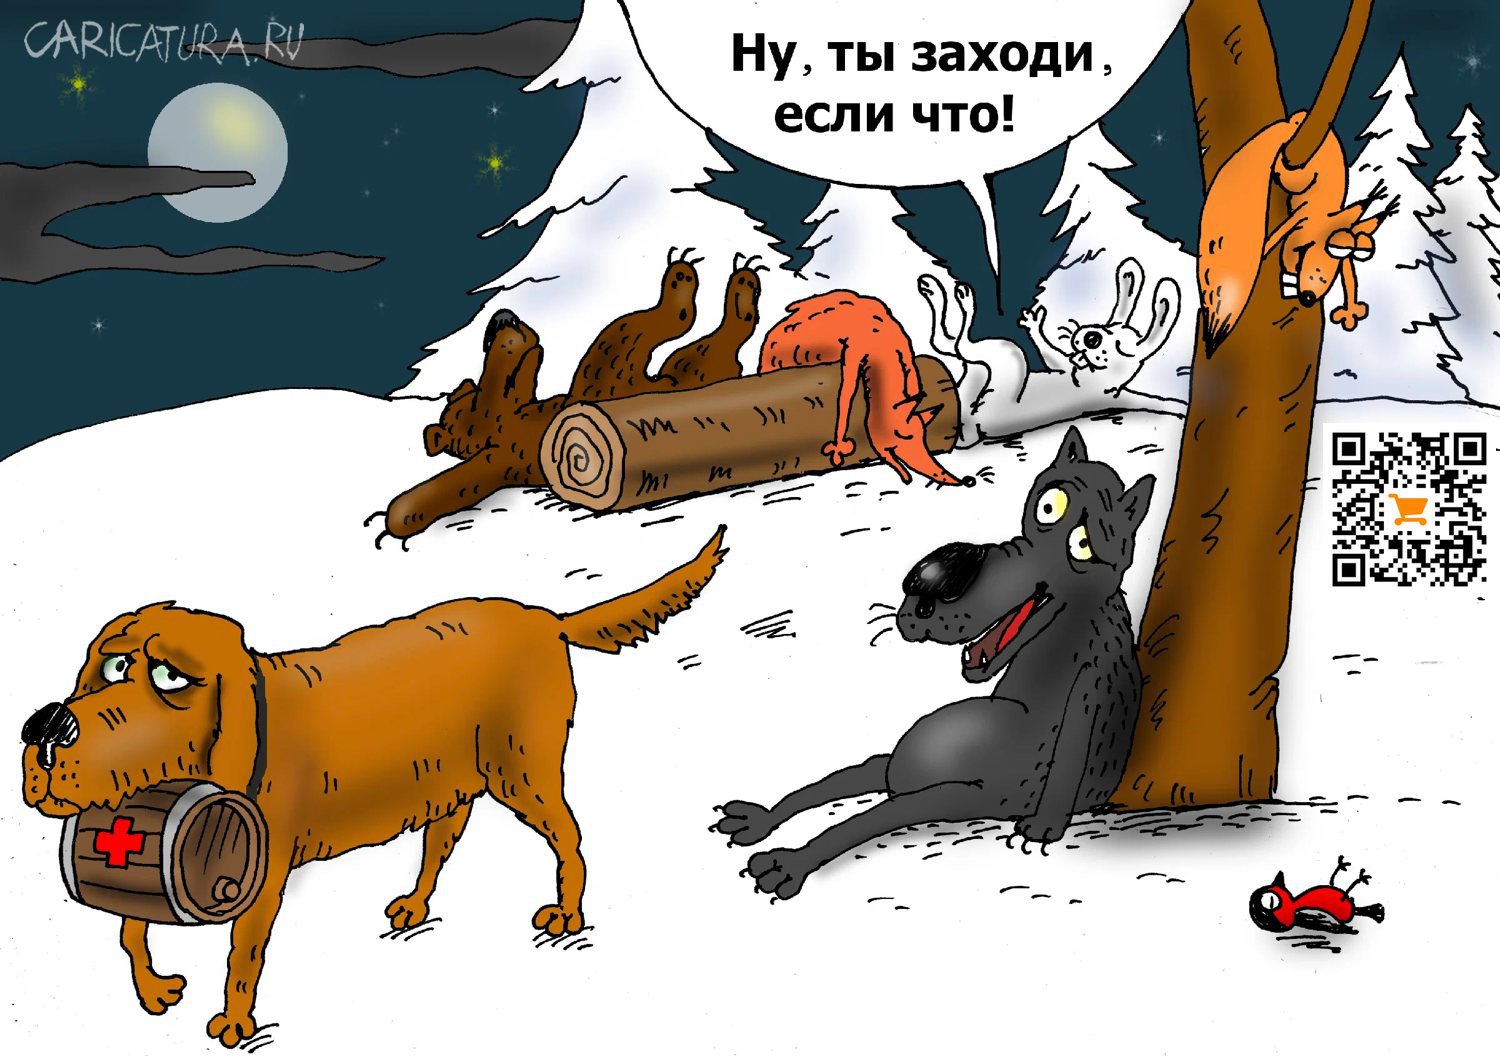 Карикатура "Если что", Валерий Тарасенко